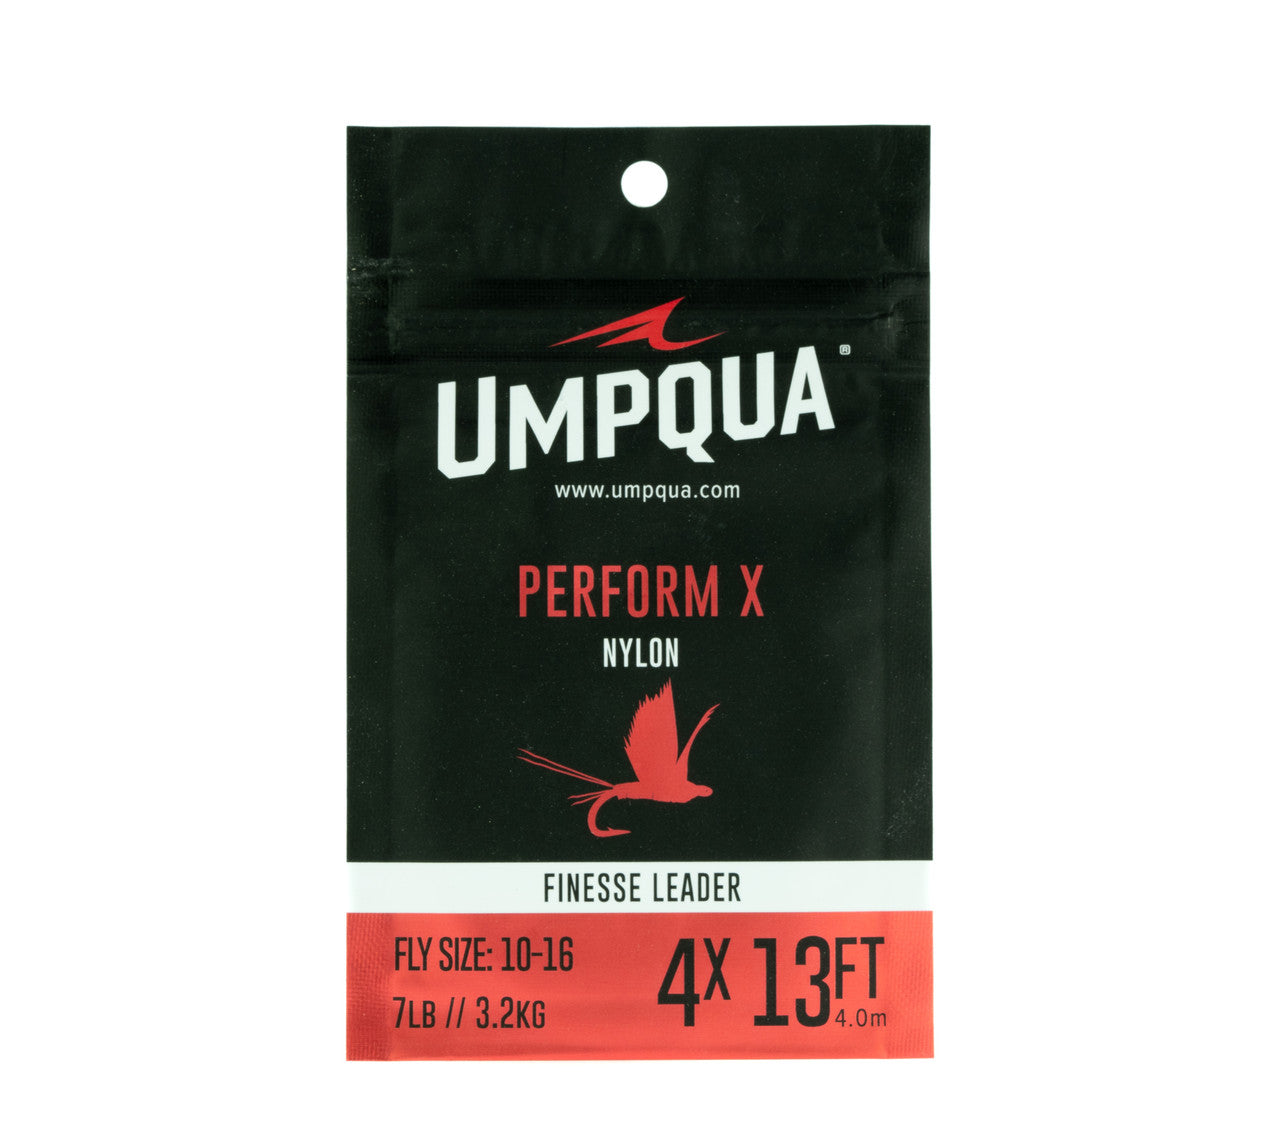 Umpqua Perform X Finesse Leader